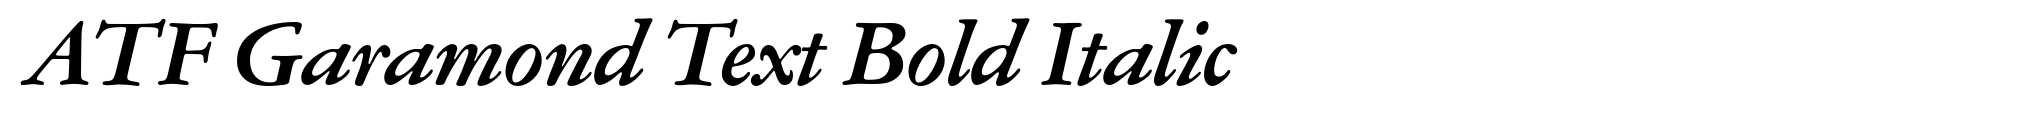 ATF Garamond Text Bold Italic image